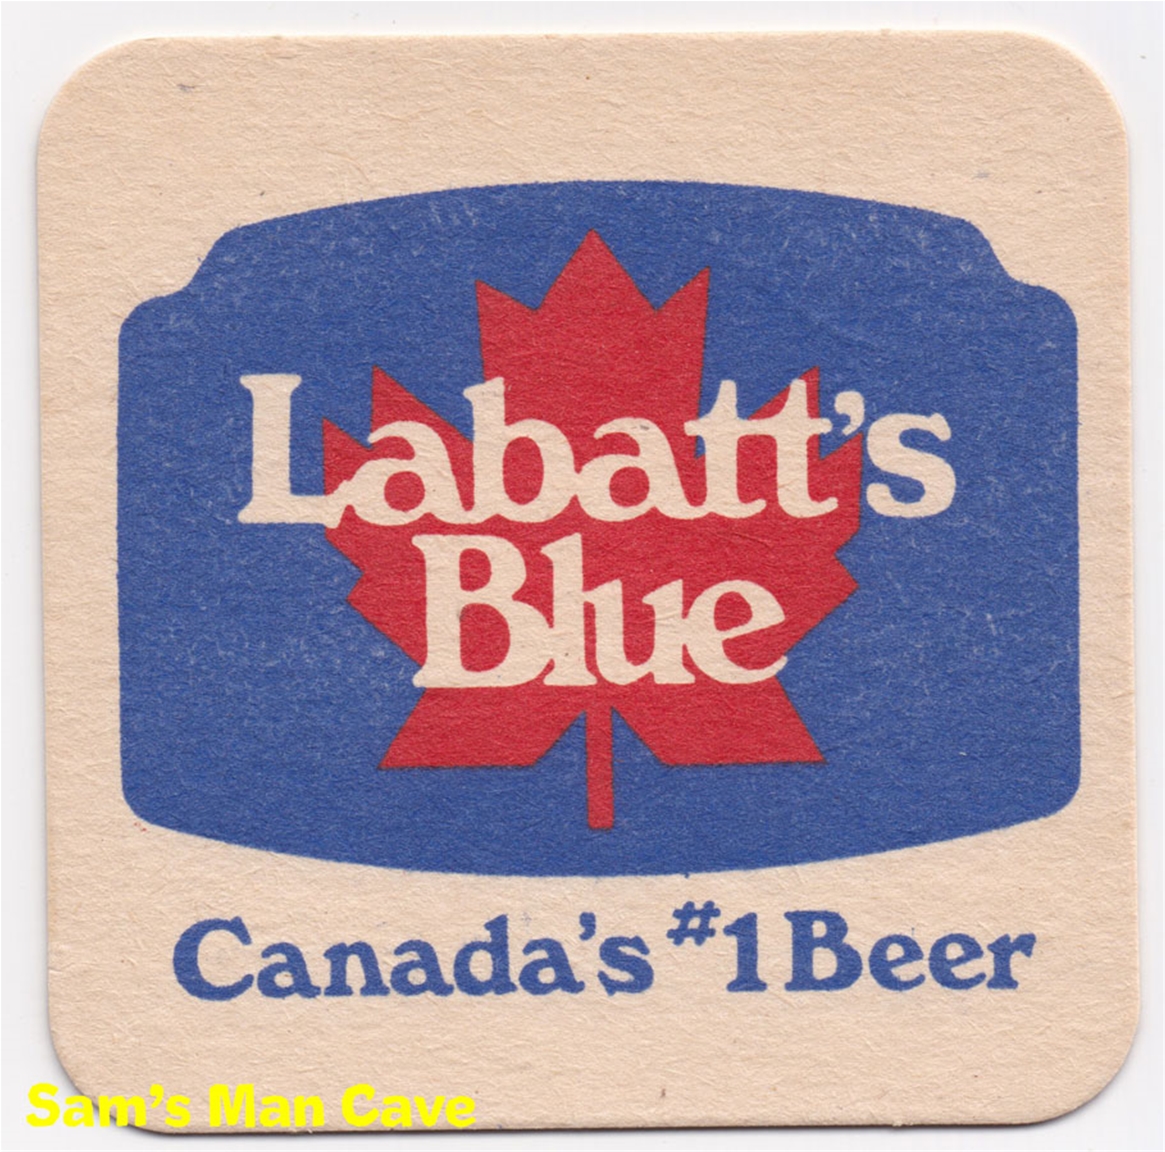 Labatt Blue Canada's #1 Beer Coaster